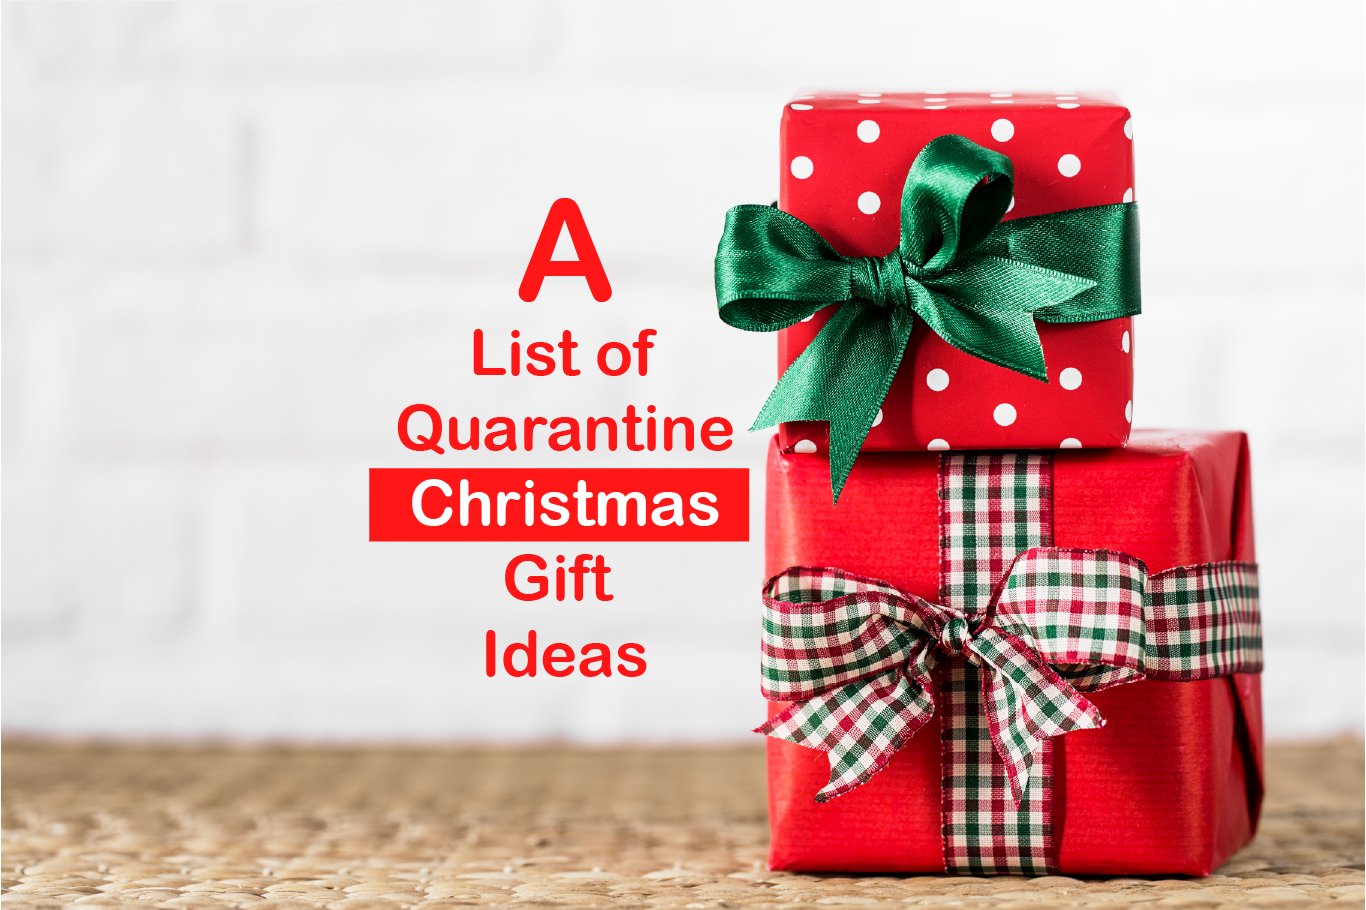 A List of Quarantine Christmas Gift Ideas